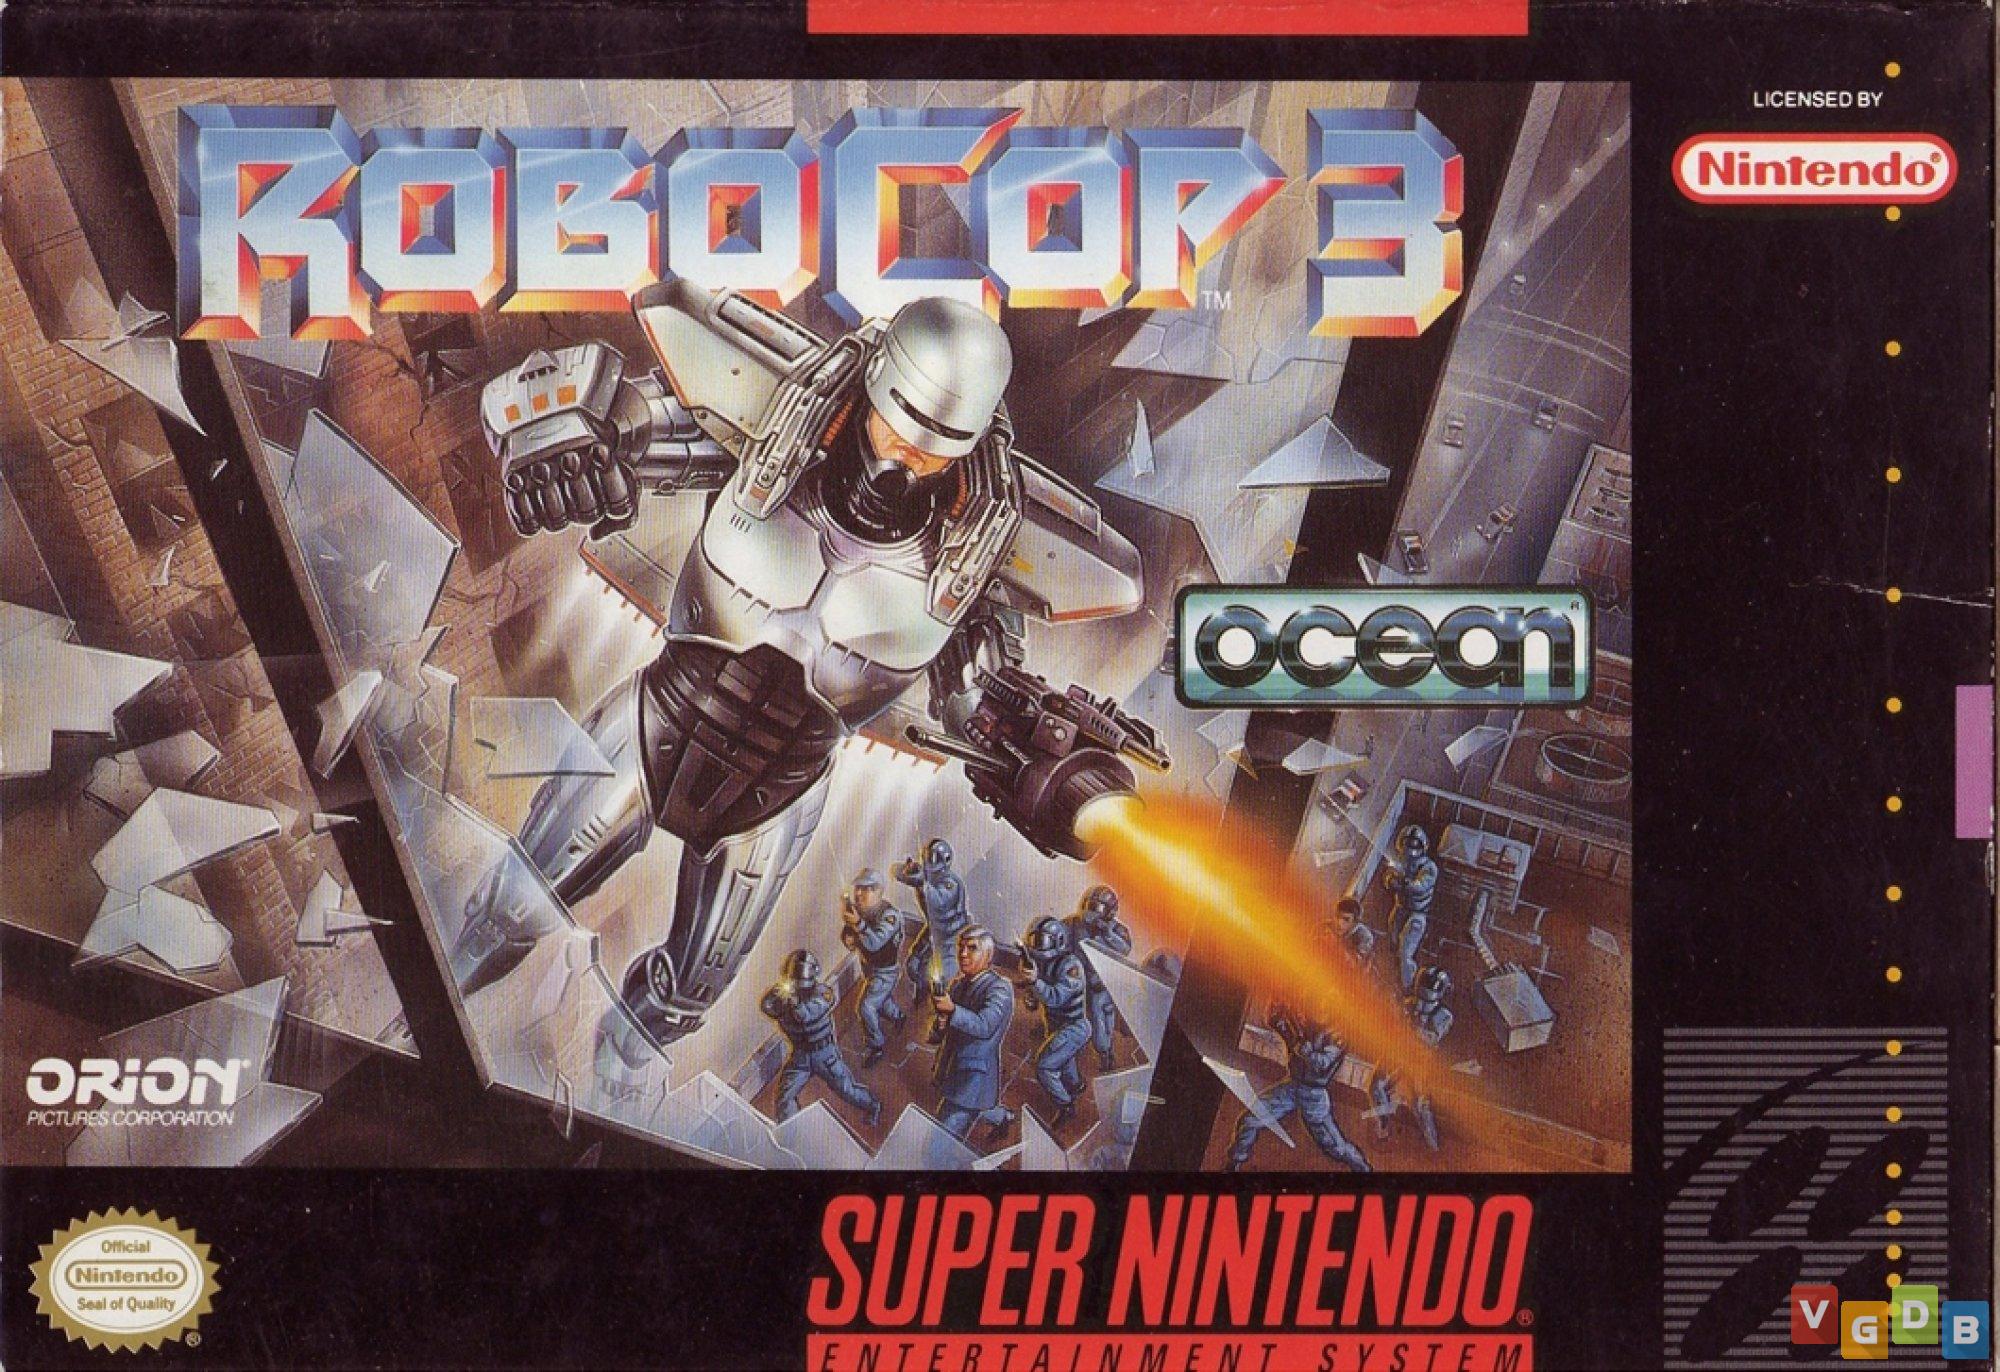 RoboCop 3 - VGDB - Vídeo Game Data Base